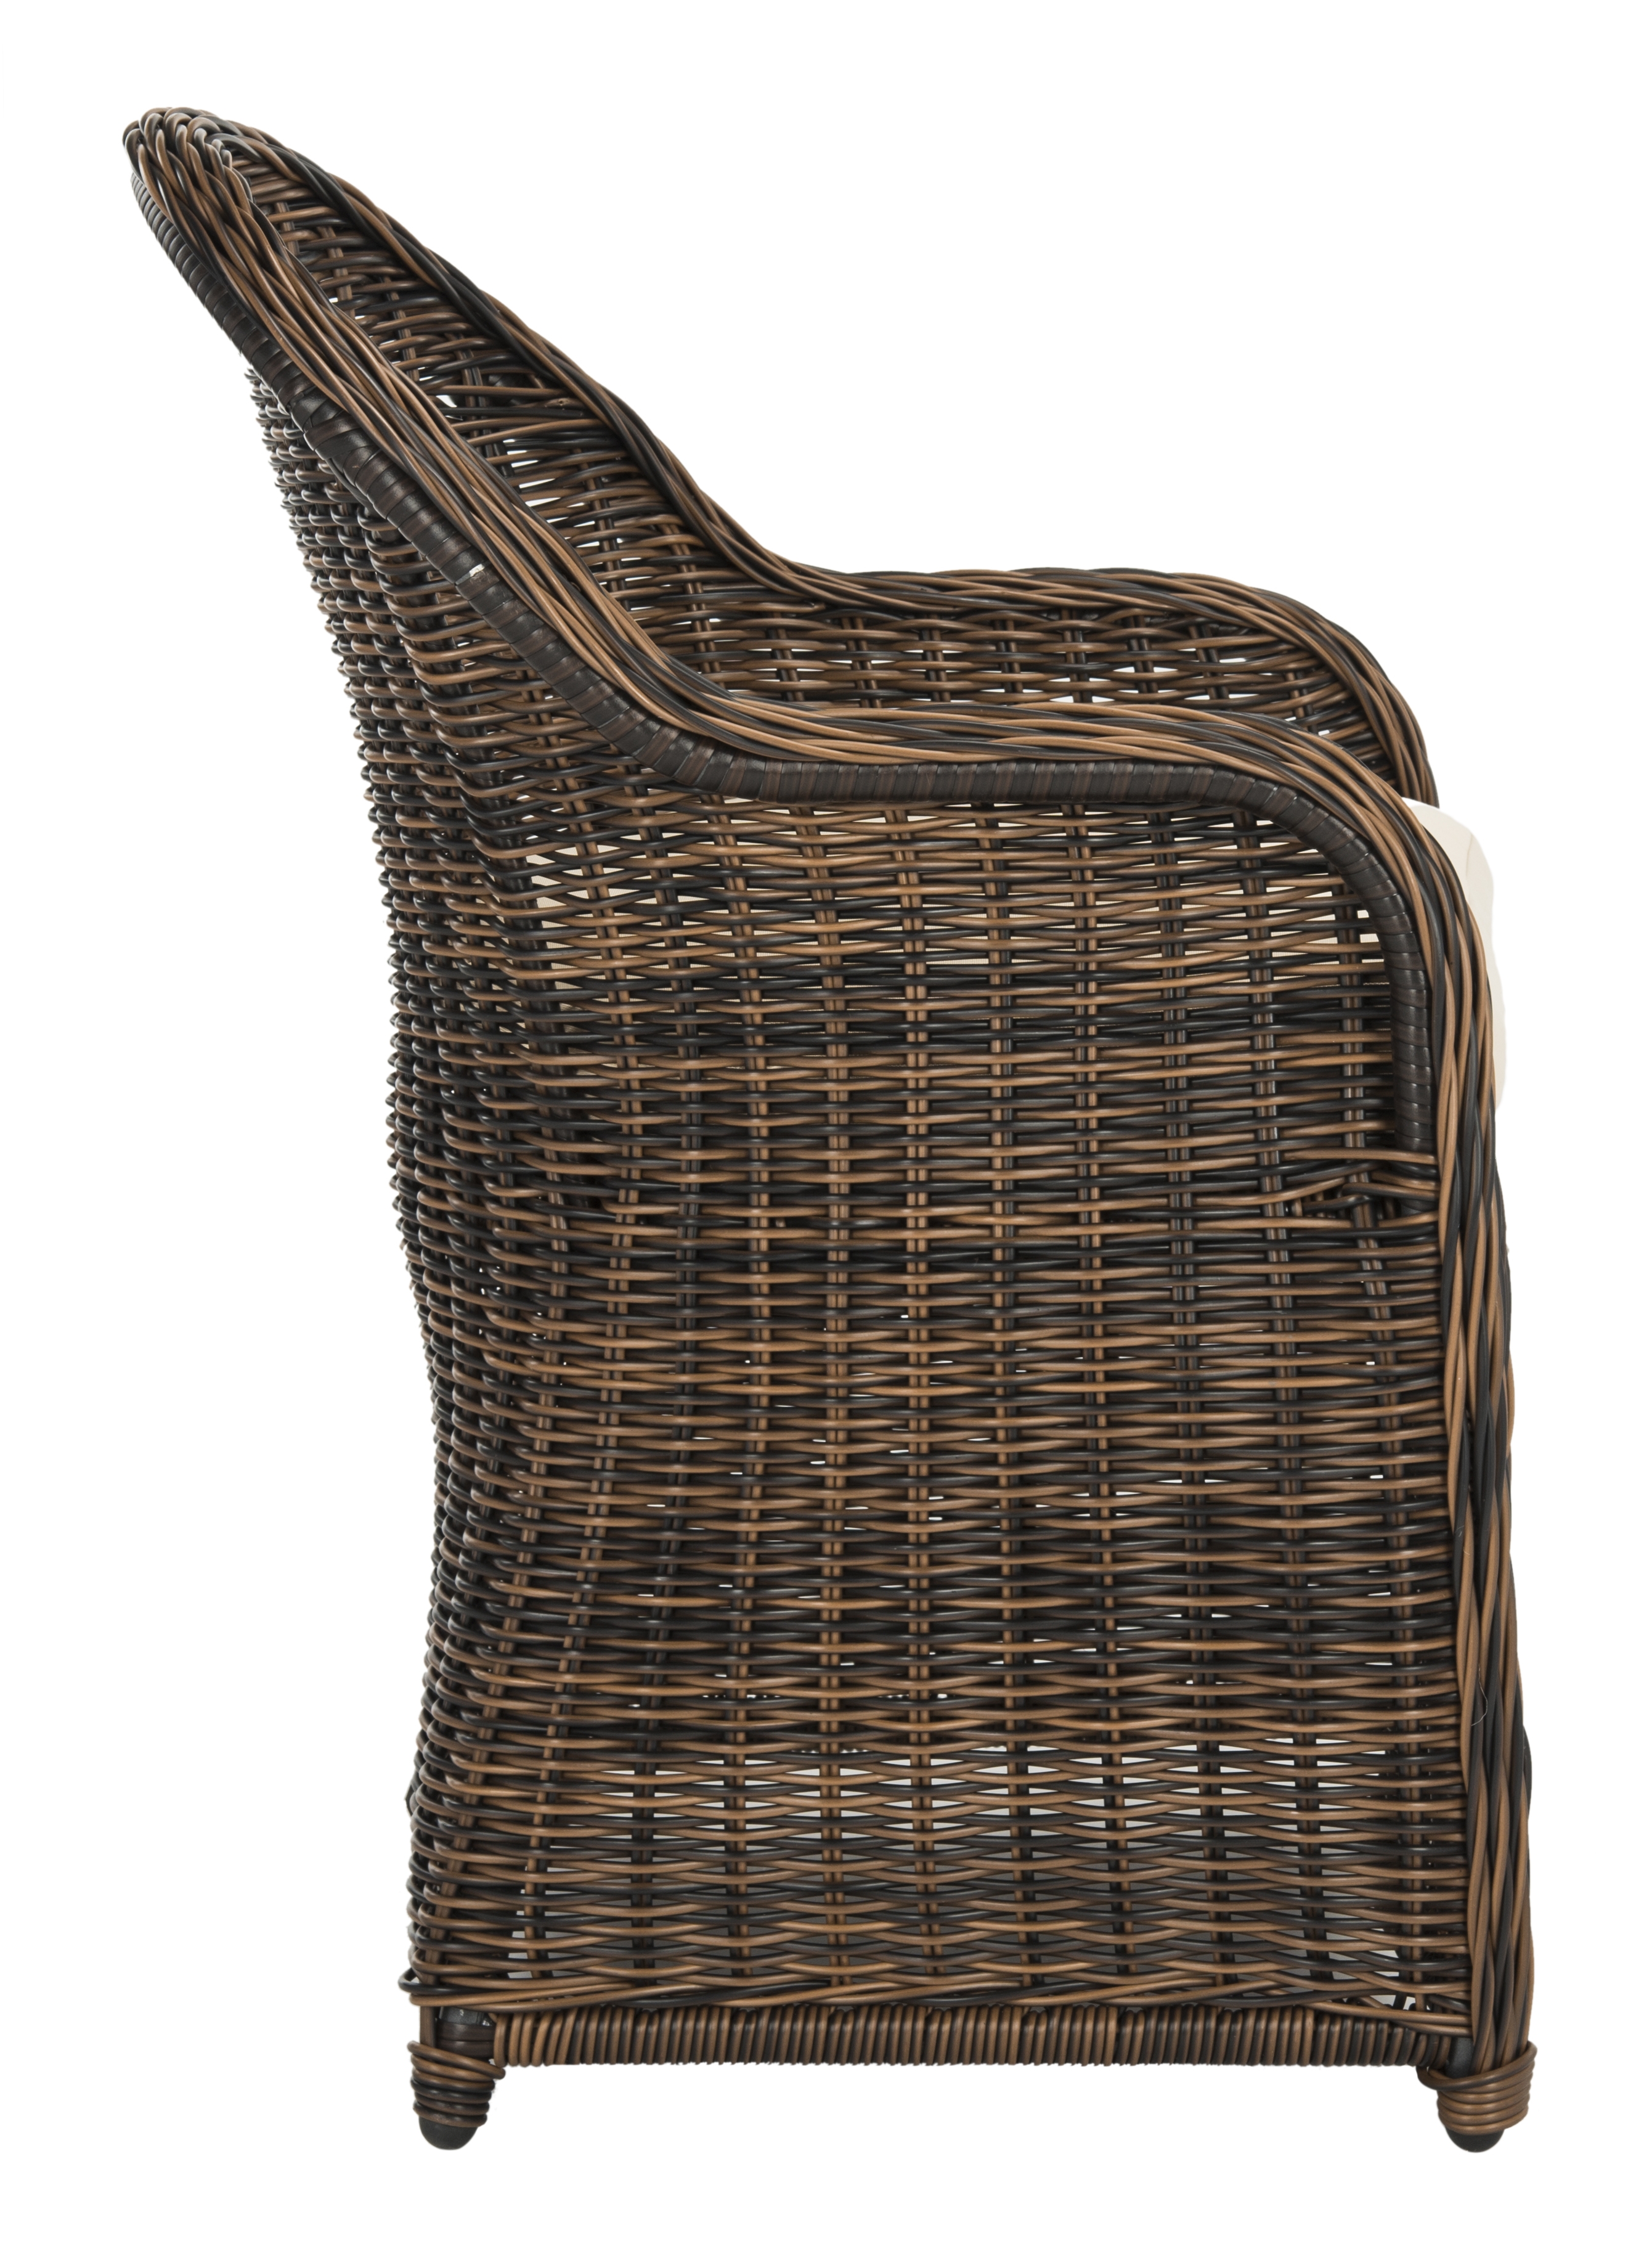 Newton Wicker Arm Chair With Cushion - Brown/Beige - Safavieh - Image 2